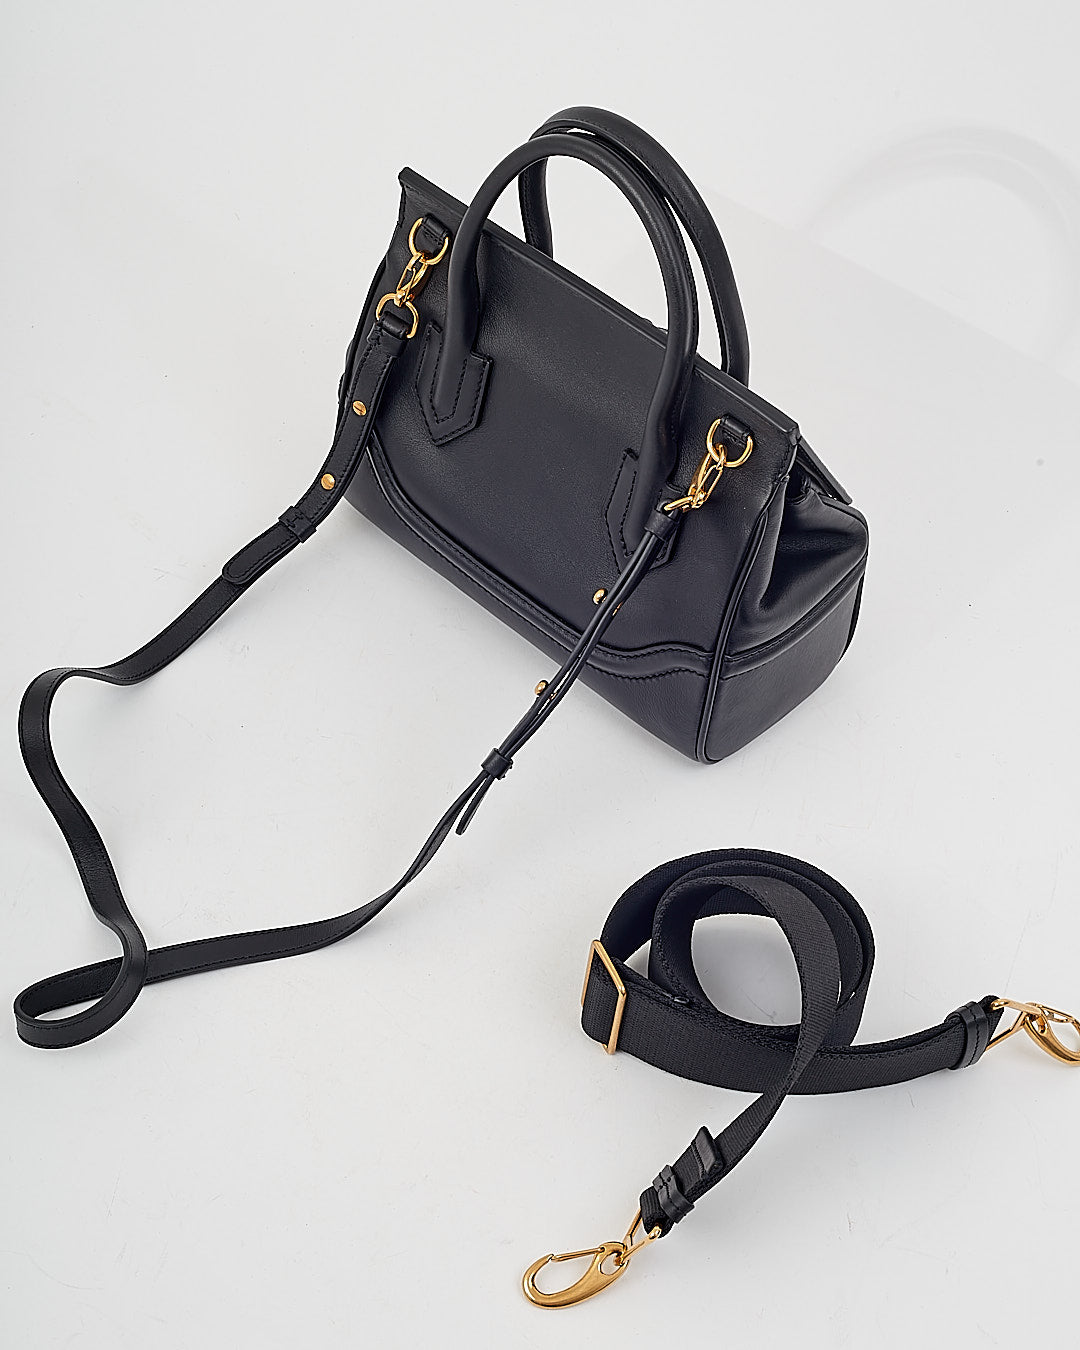 Versace Black Palazzo Empire Swarovski Detail Top Handle Bag